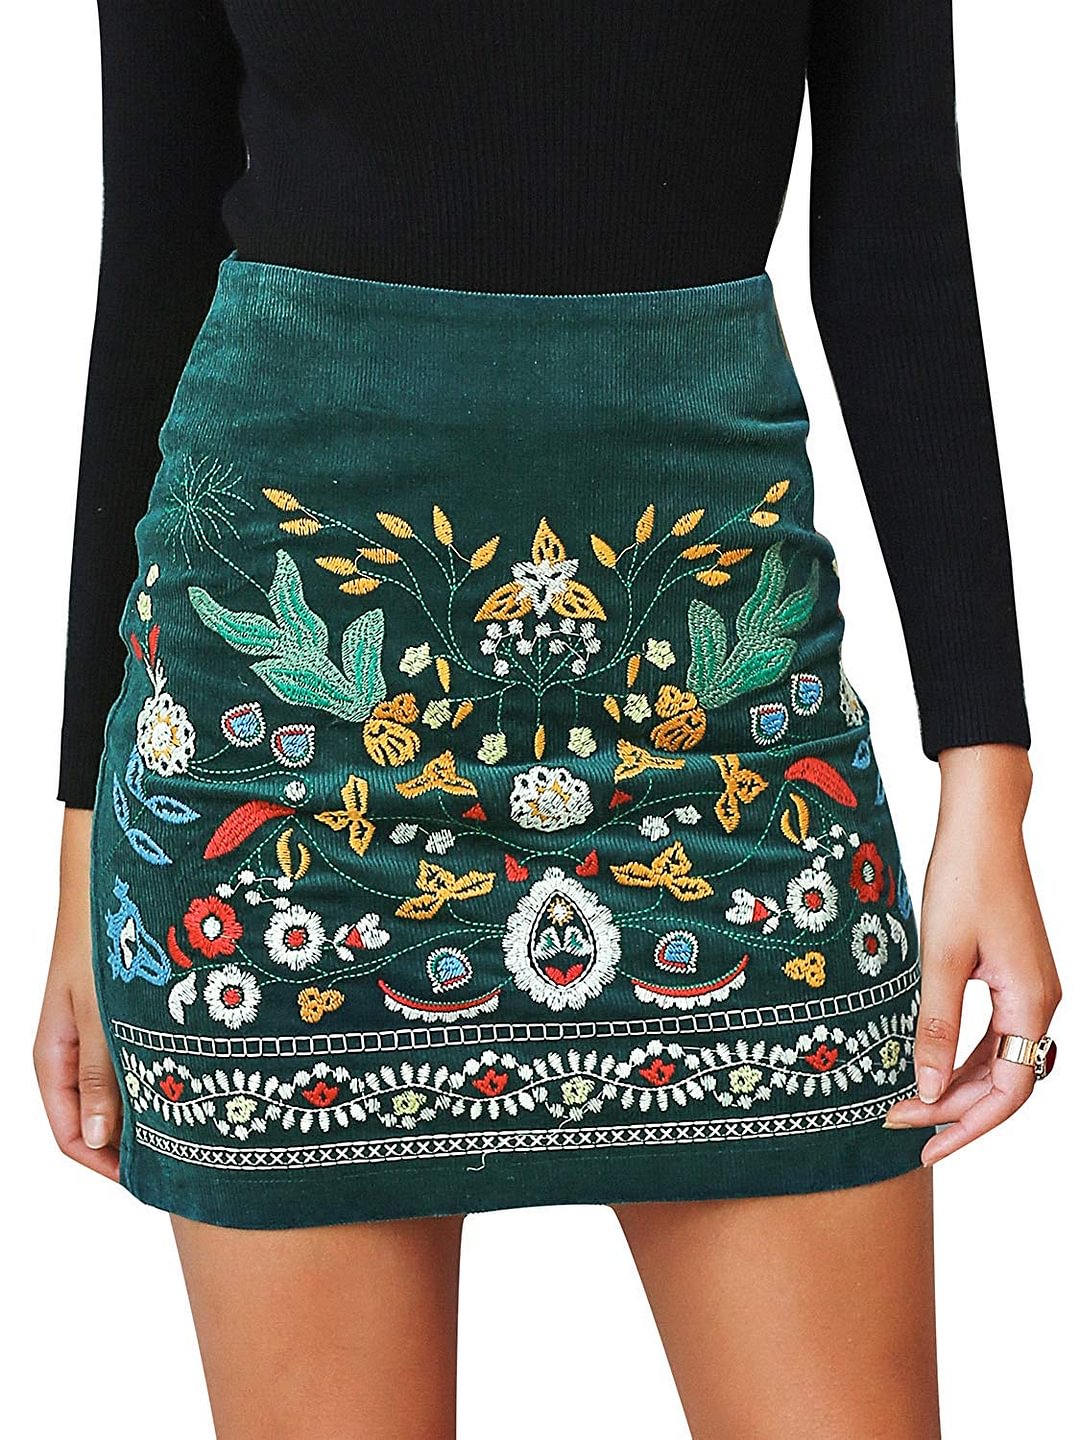 Women's High Waist Embroidered Mini Skirt Boho Floral Pencil Skirt